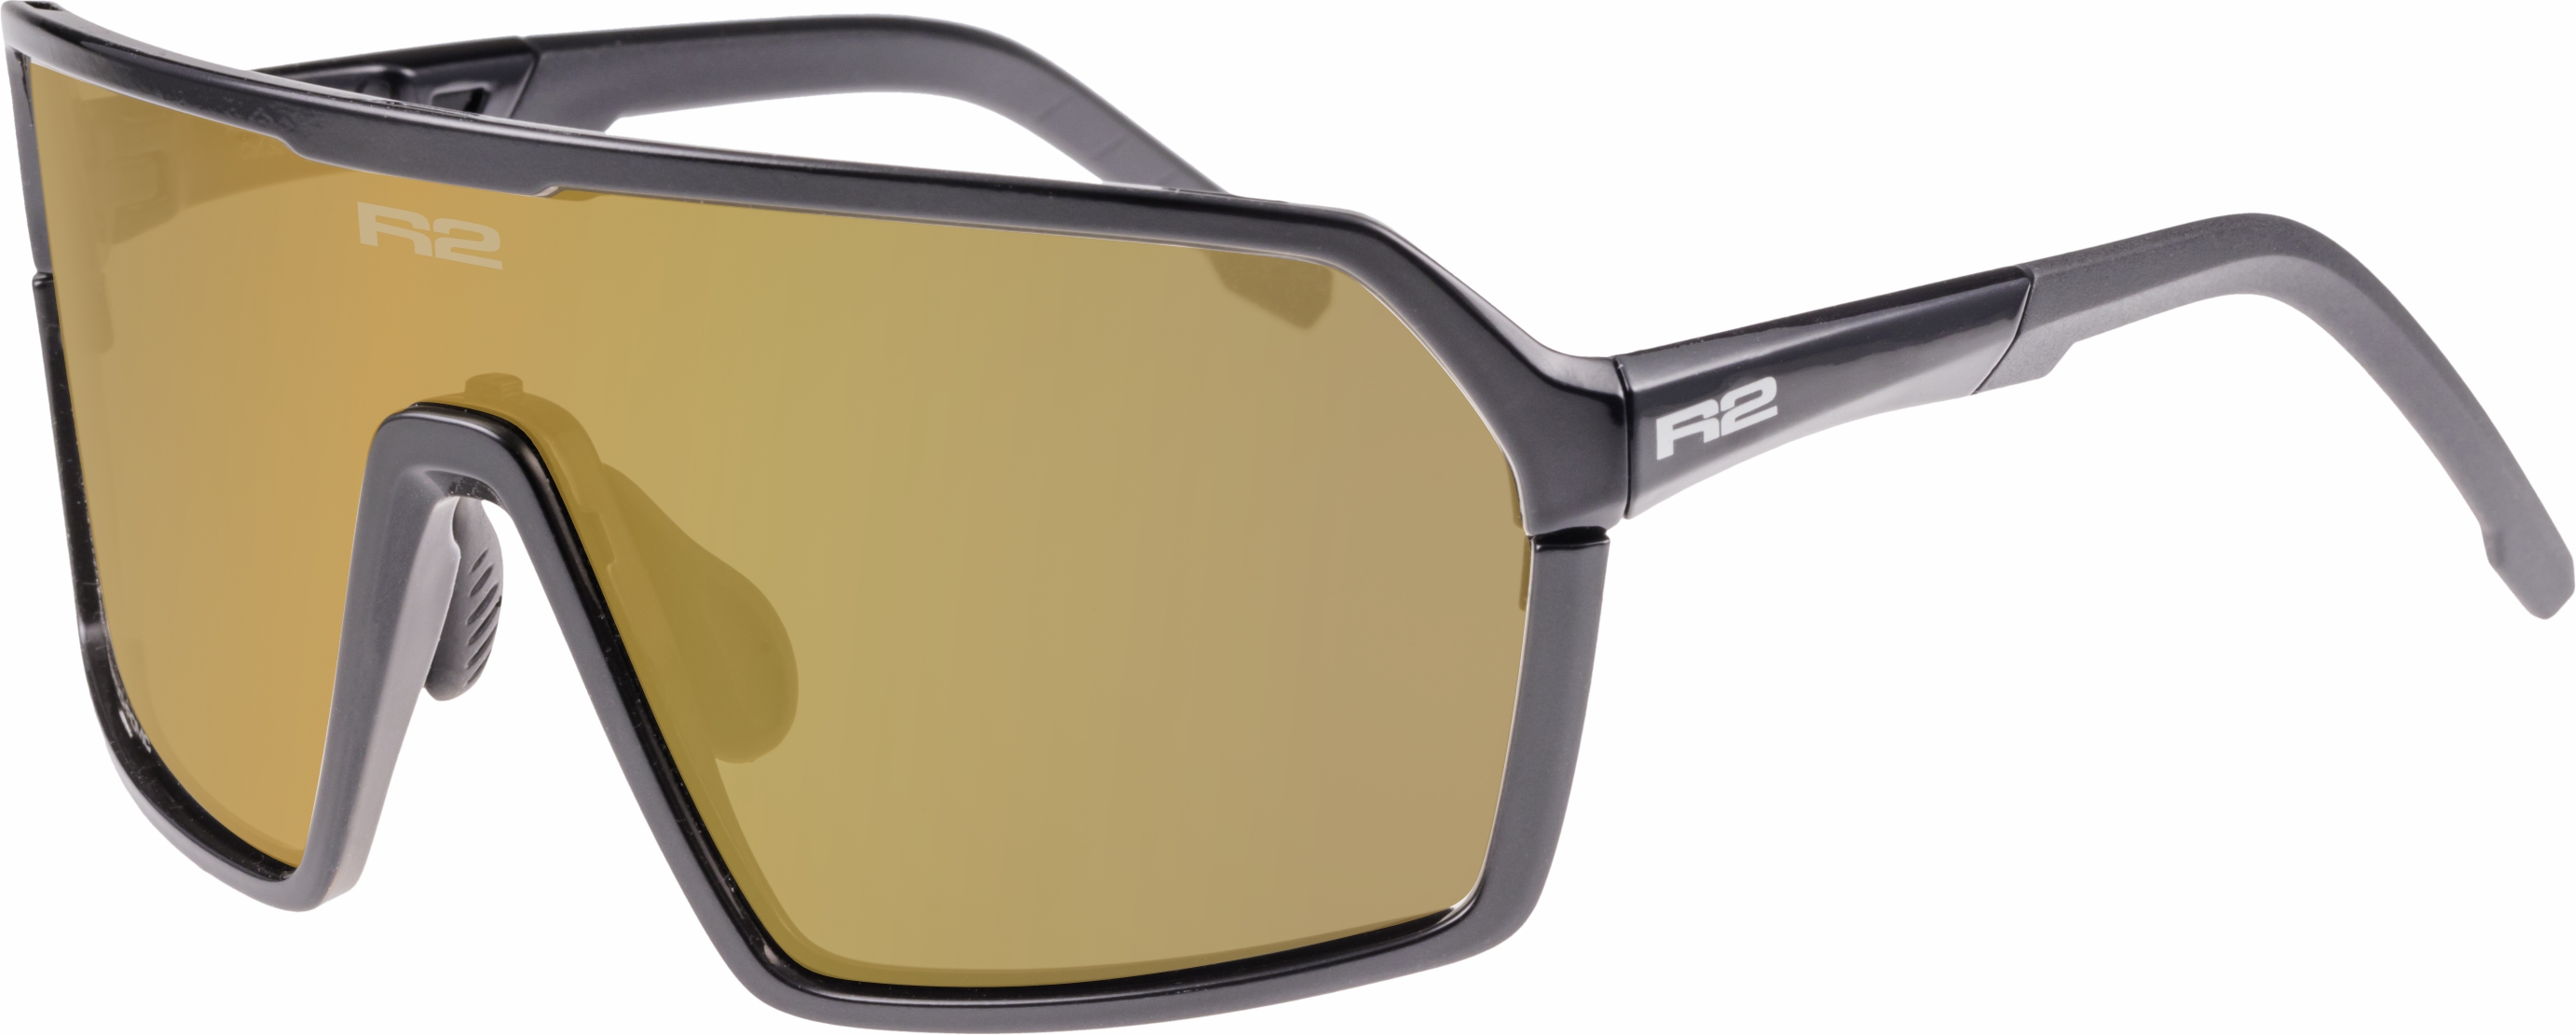 Sport sunglasses R2 FACTOR AT111A standard